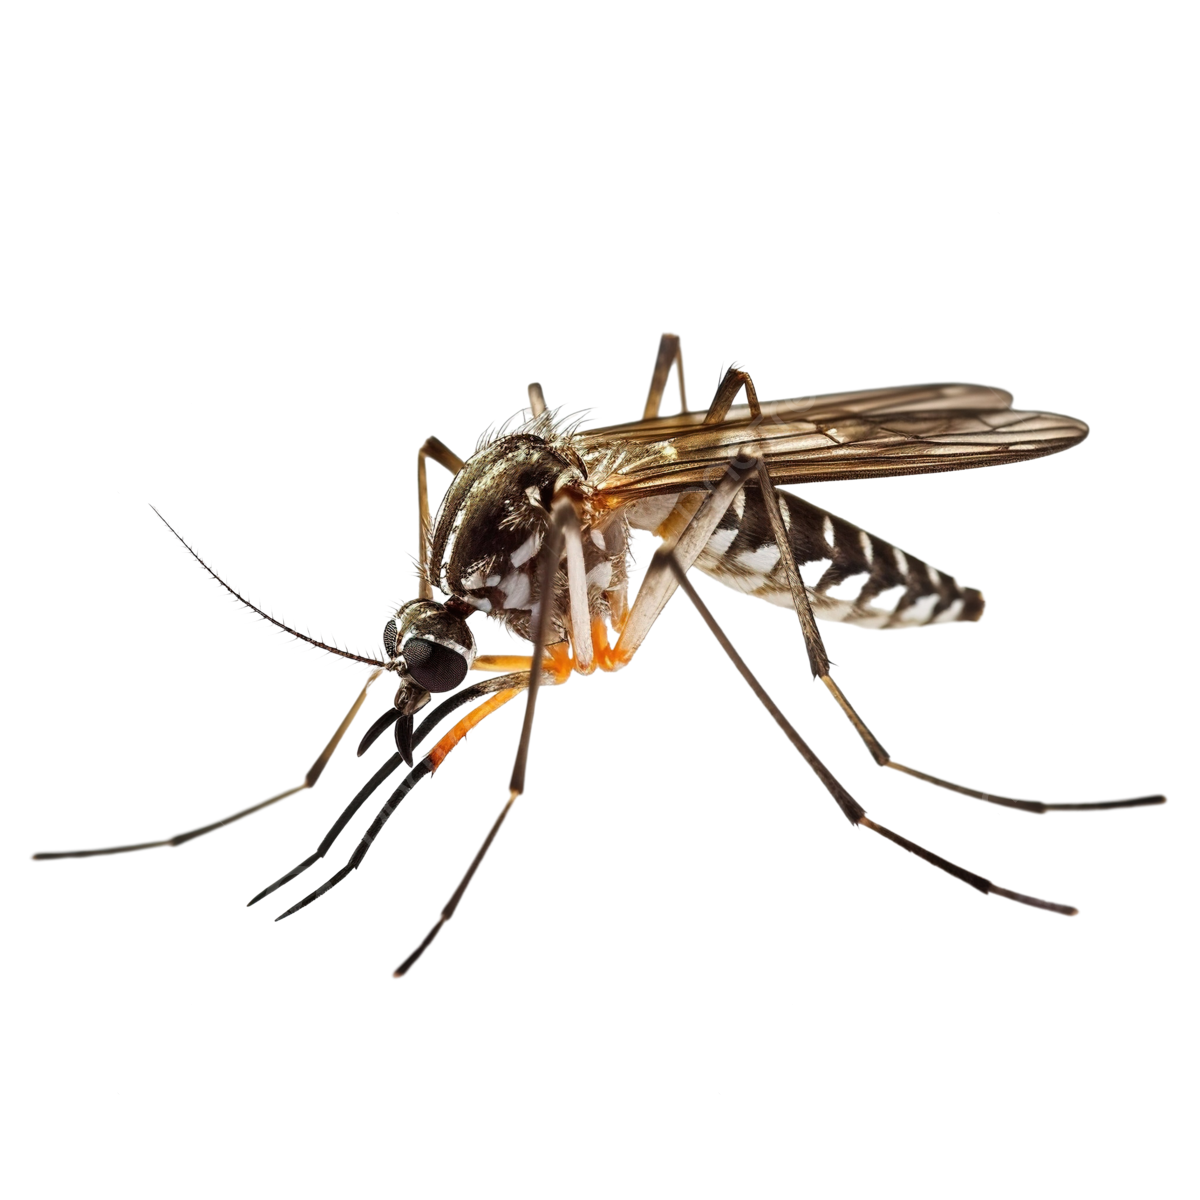 Inilah 5 Jenis Serangga yang Sering Muncul di Rumah, Bukan Hanya Mengganggu Tapi Juga Membawa Penyakit!